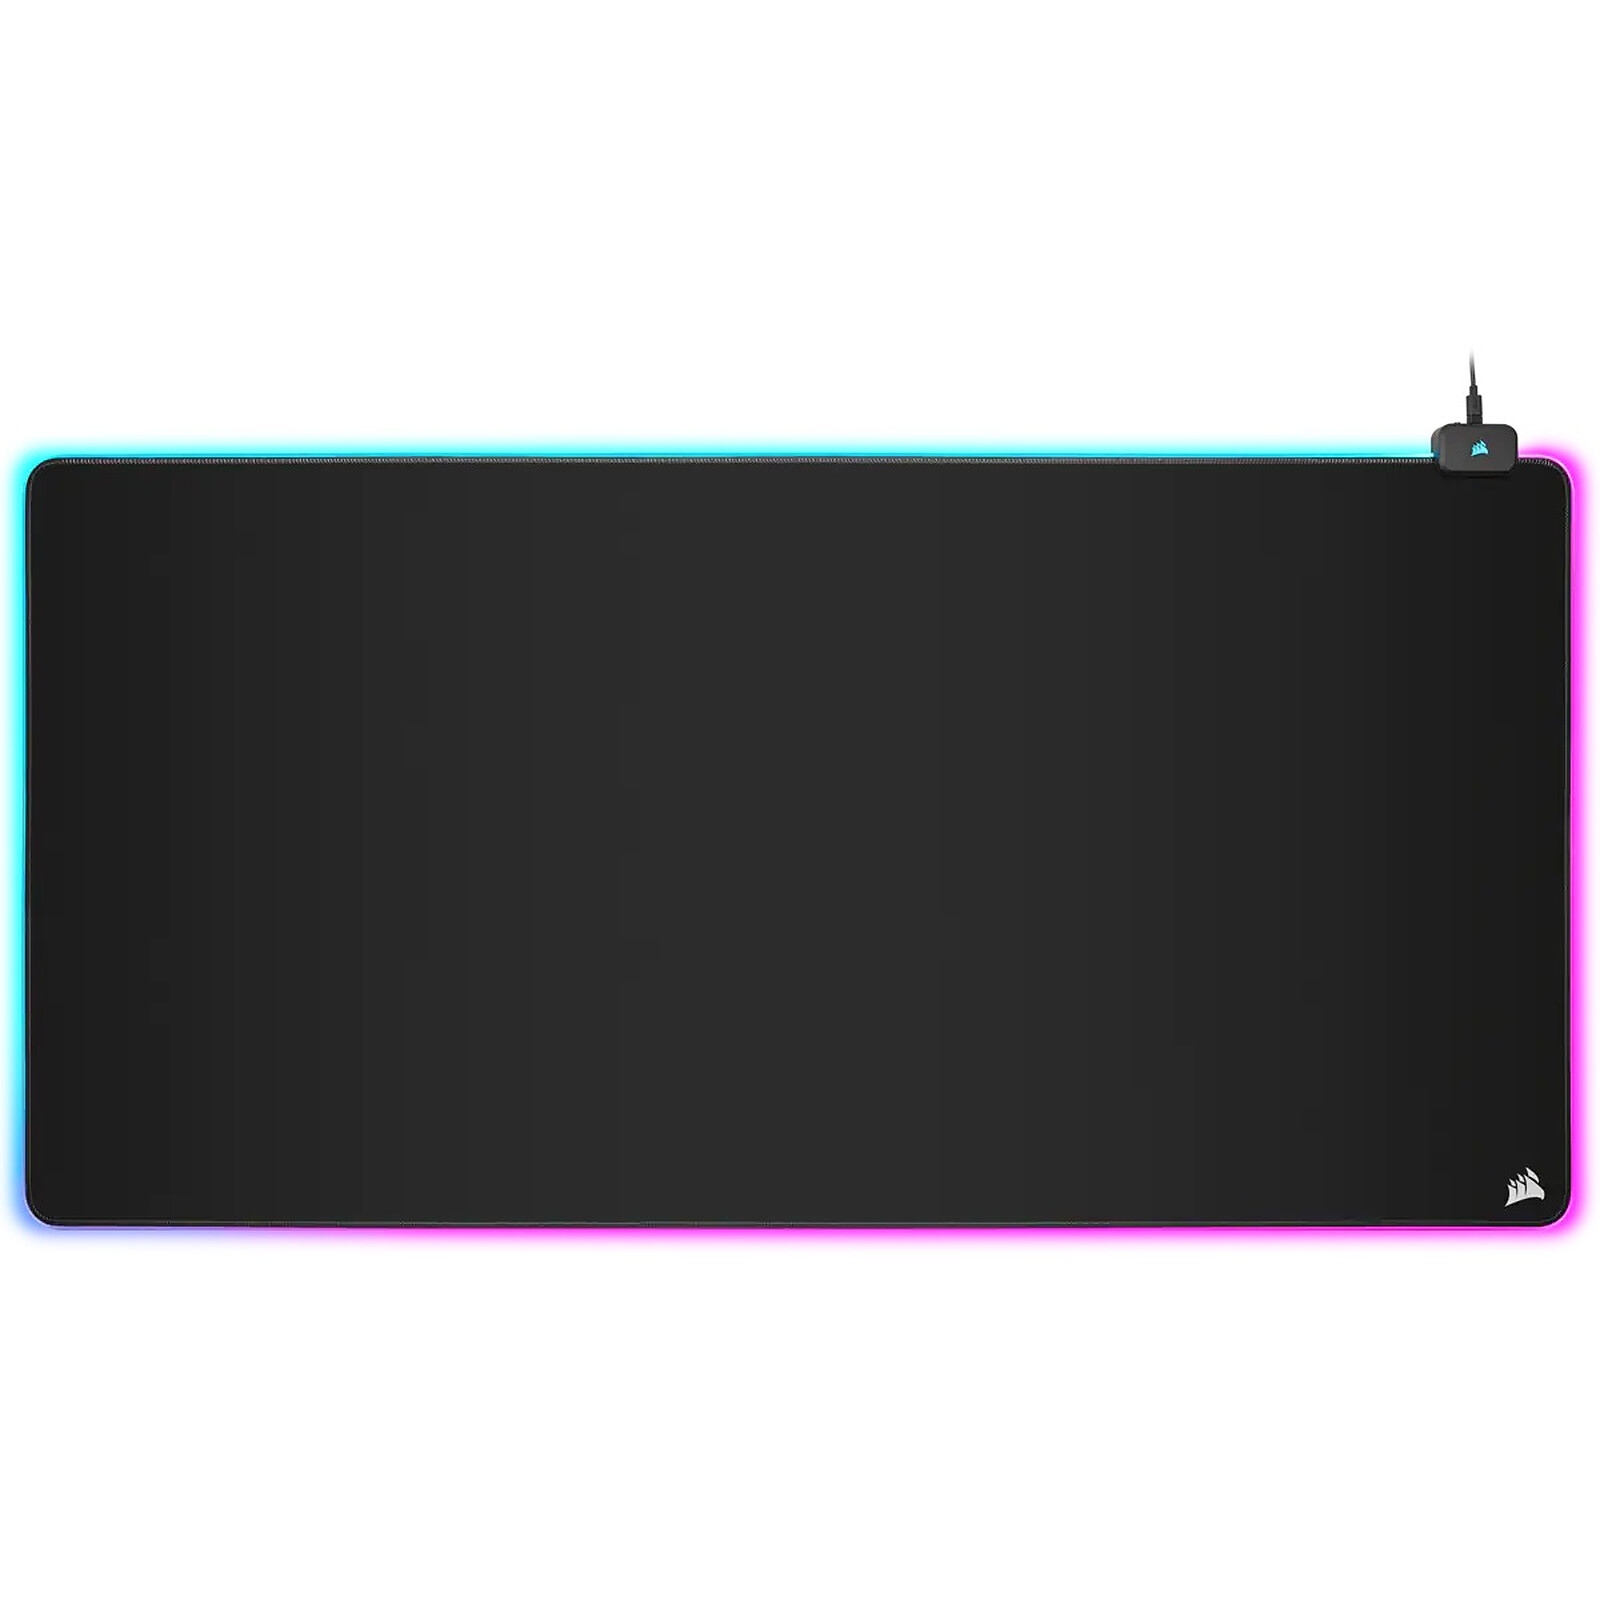 Corsair Gaming MM700 RGB Extended 3XL - Tapis de souris - Garantie 3 ans  LDLC